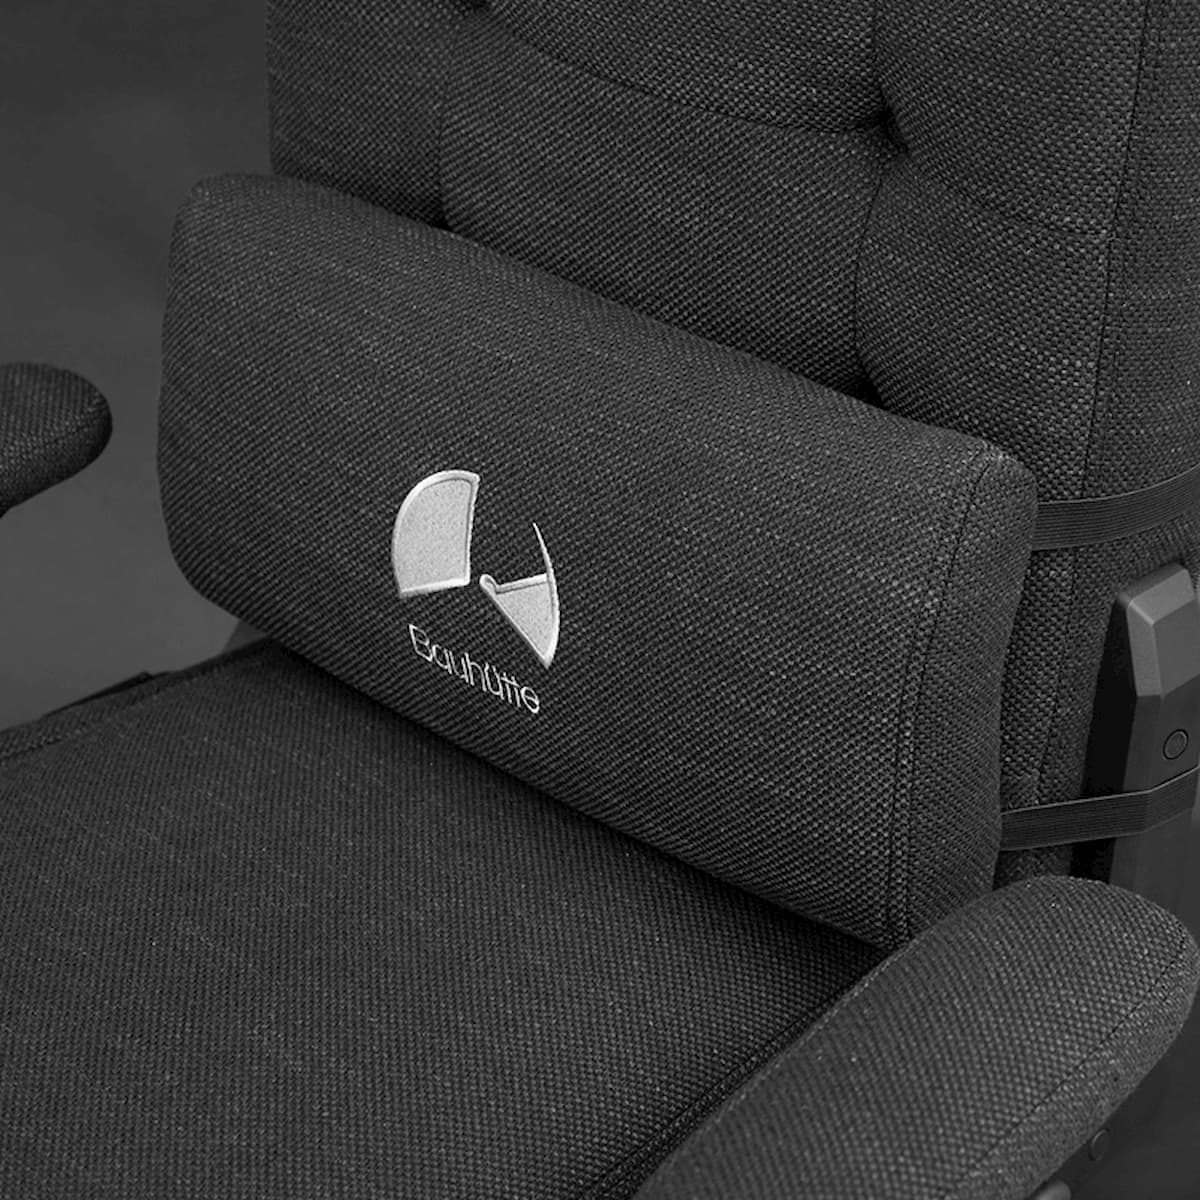 Bauhutte 電競地板沙發椅 GX-350